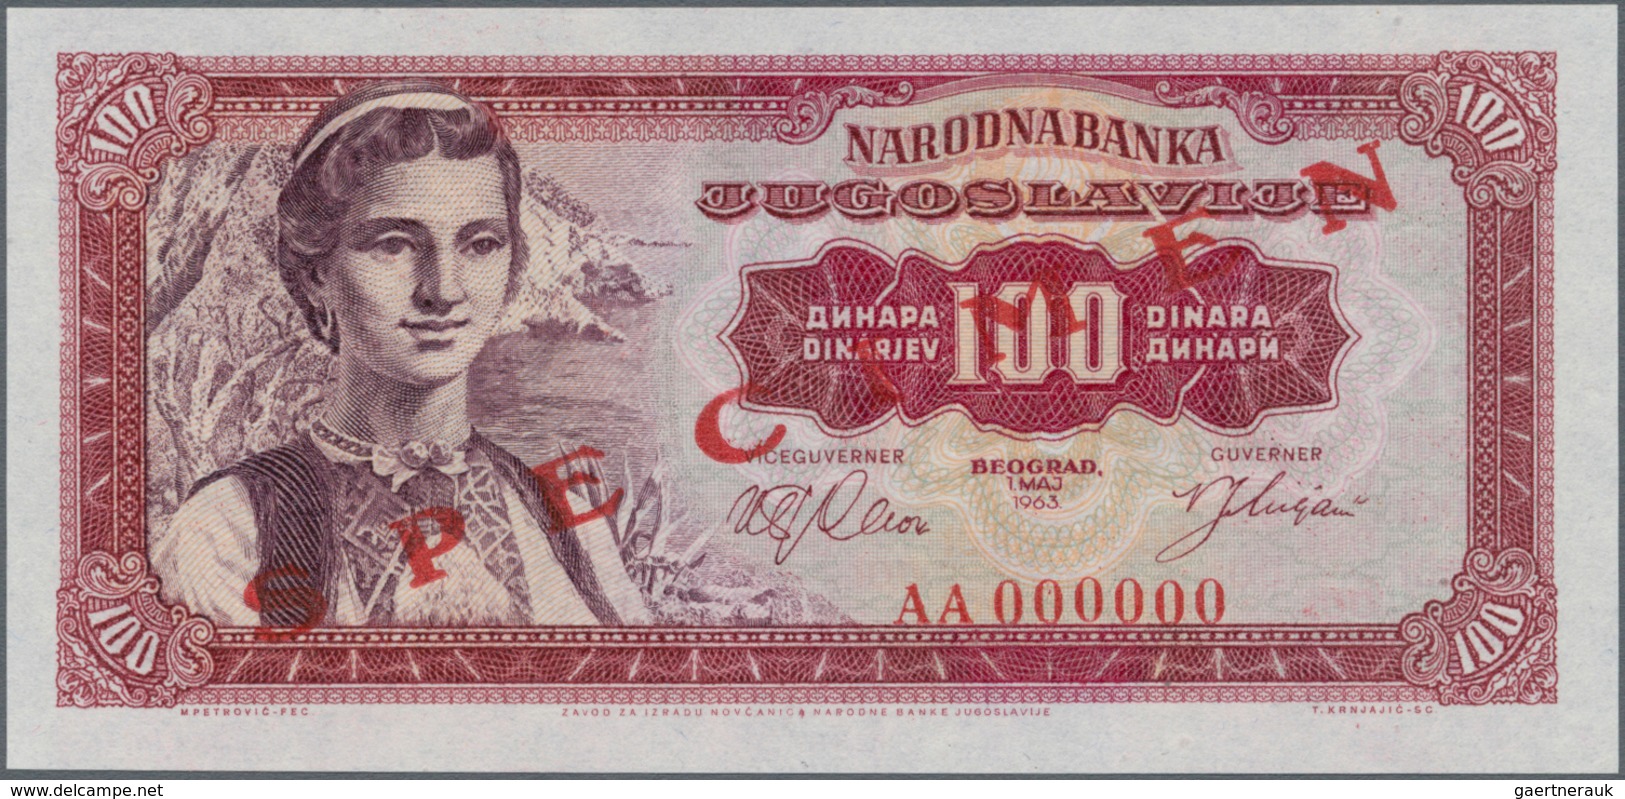 Yugoslavia / Jugoslavien: Complete Specimen set of the 1963 series with 100, 500, 1000 and 5000 Dina